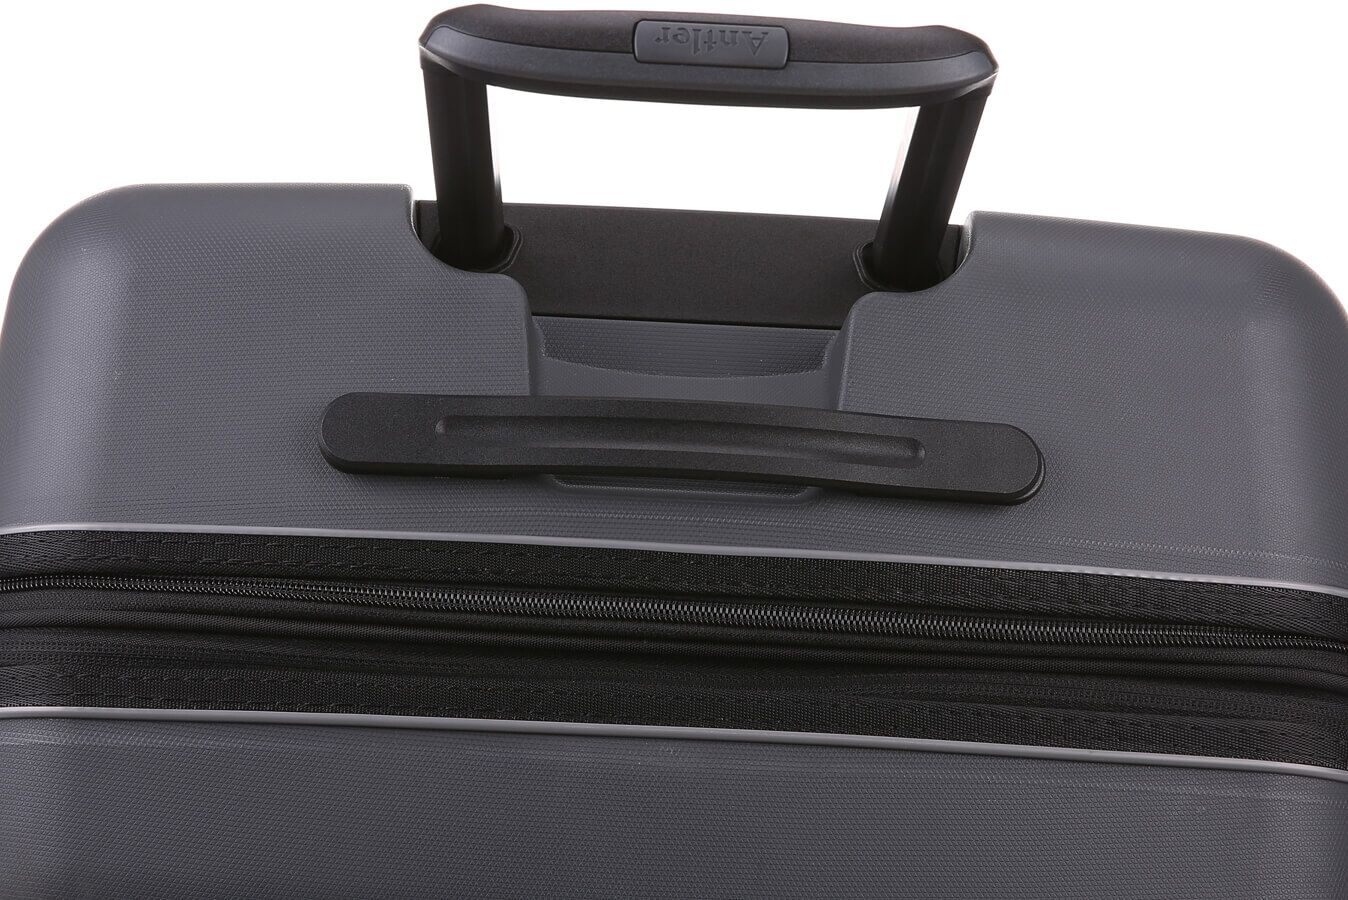 Antler - Lincoln Set of 3 Suitcases 56cm/68cm/80cm